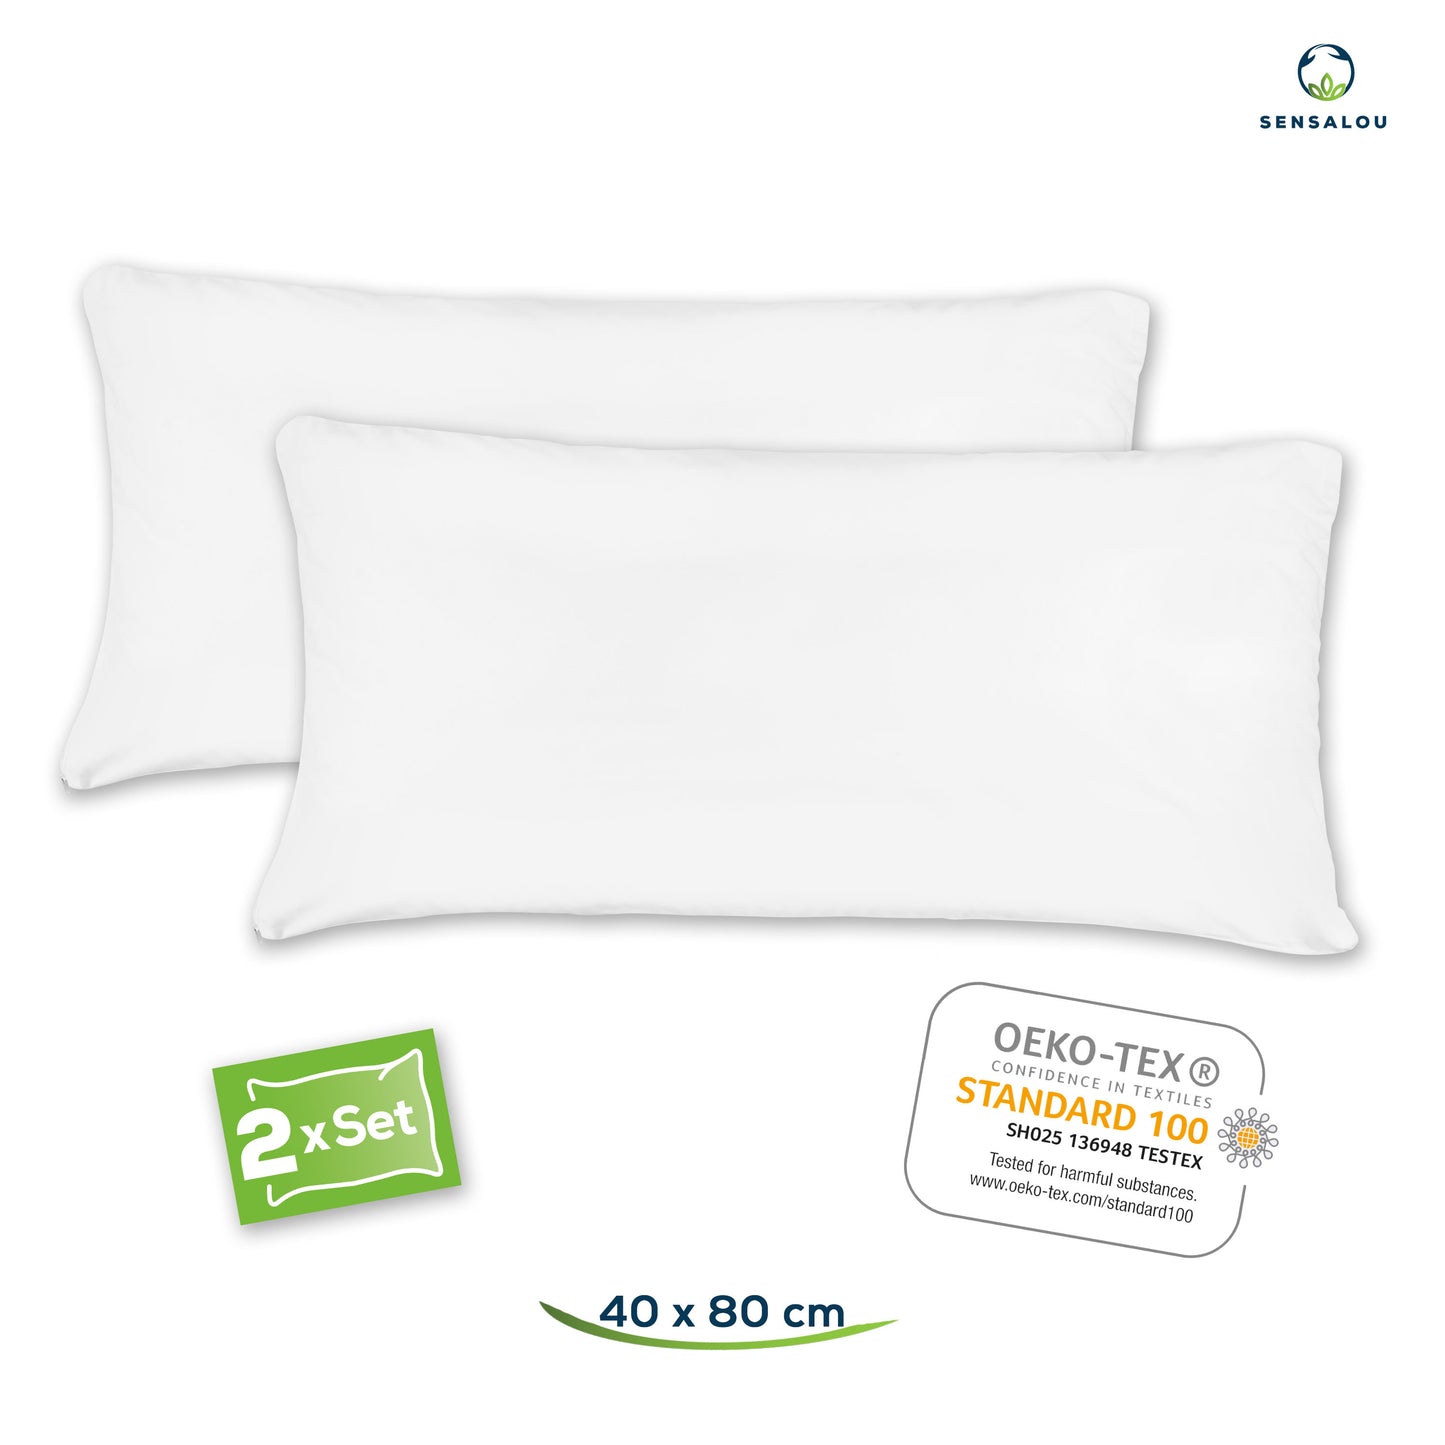 Sensalou cushion cover set of 2 waterproof